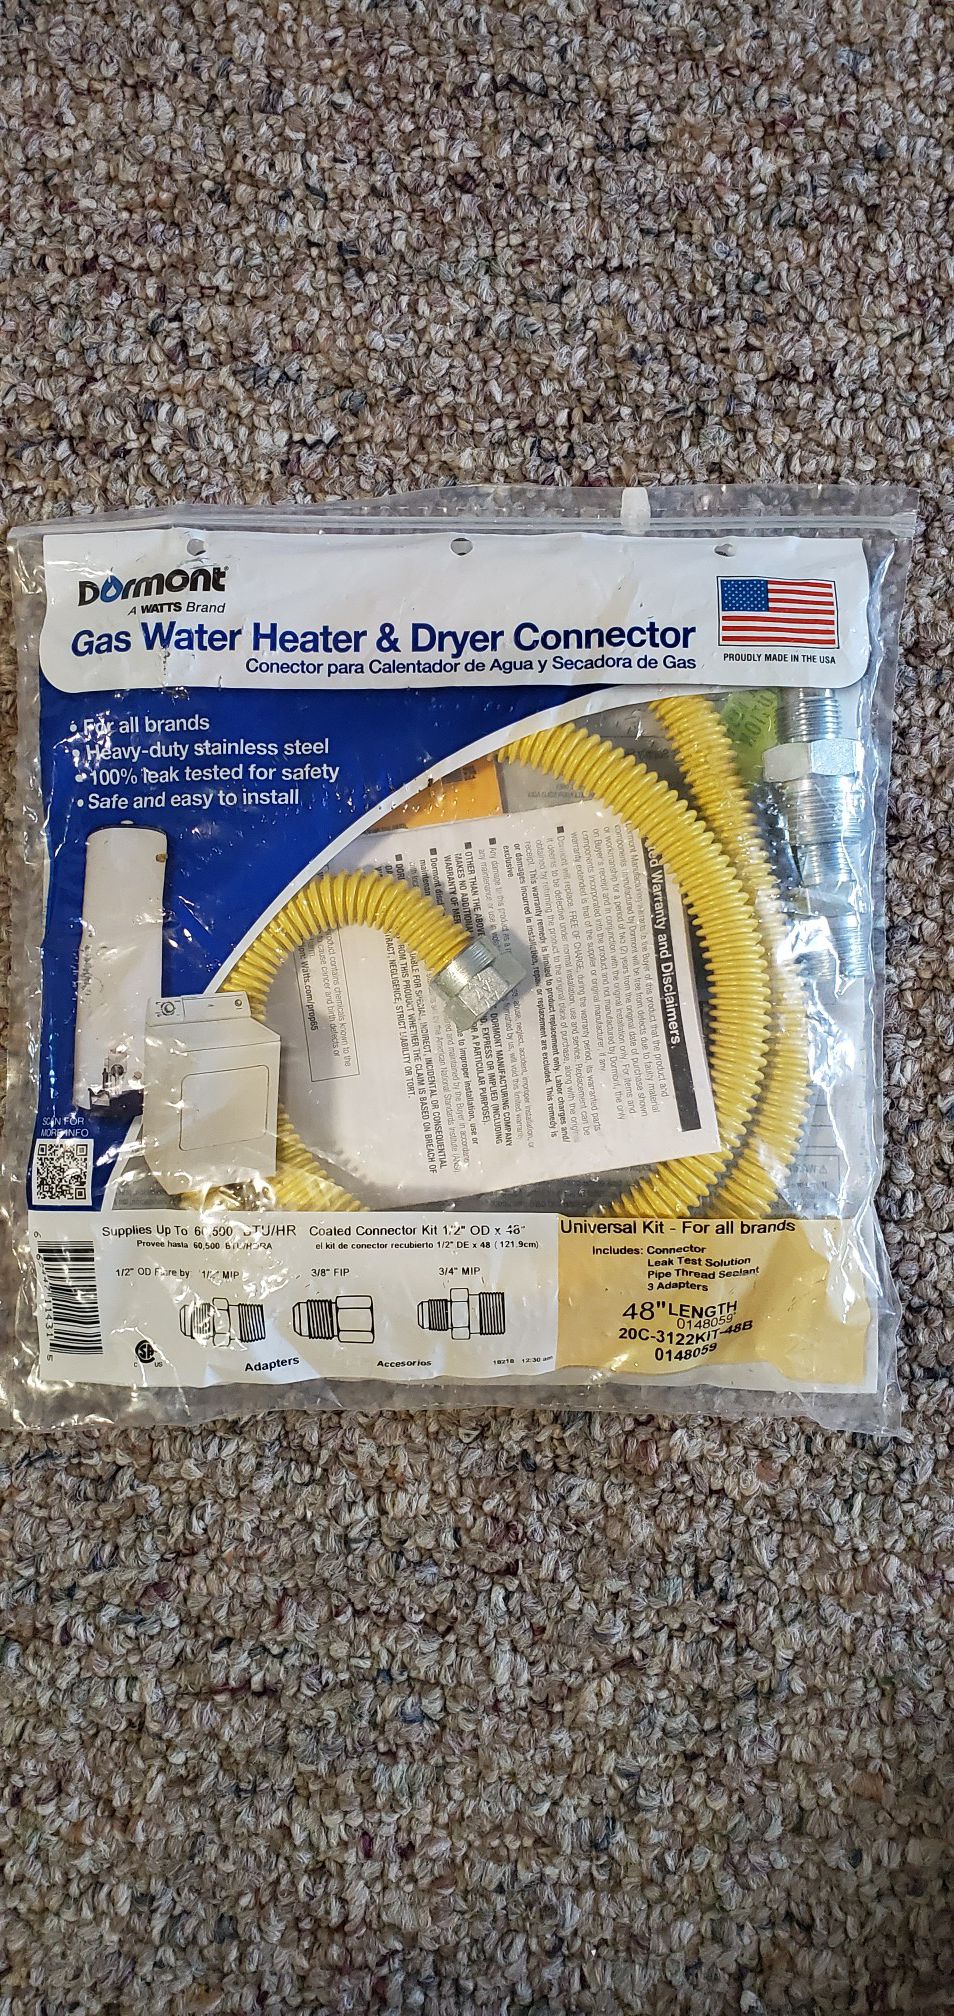 Gas Water Heater & Dryer Connector